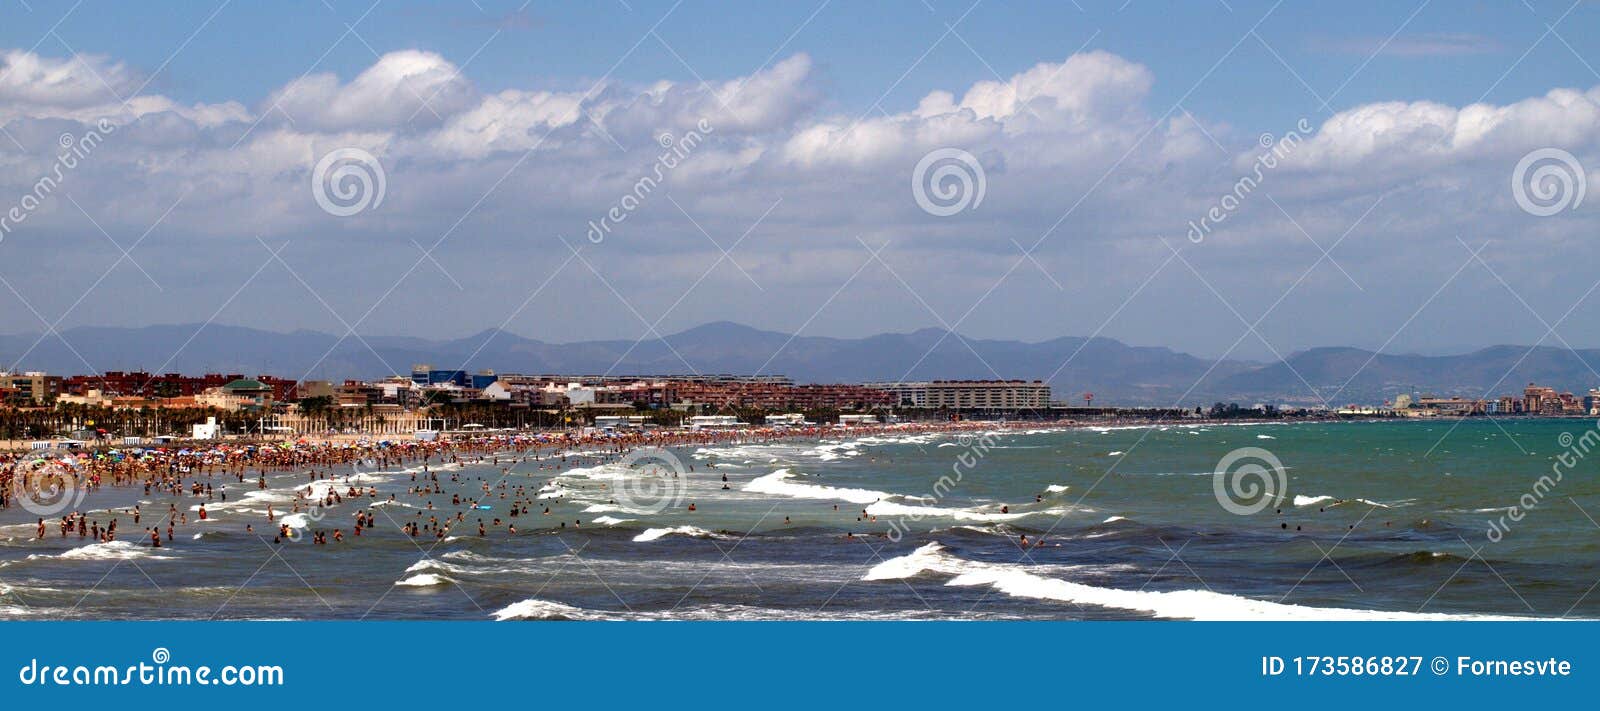 general view of the malvarrosa beach, valencia. spain